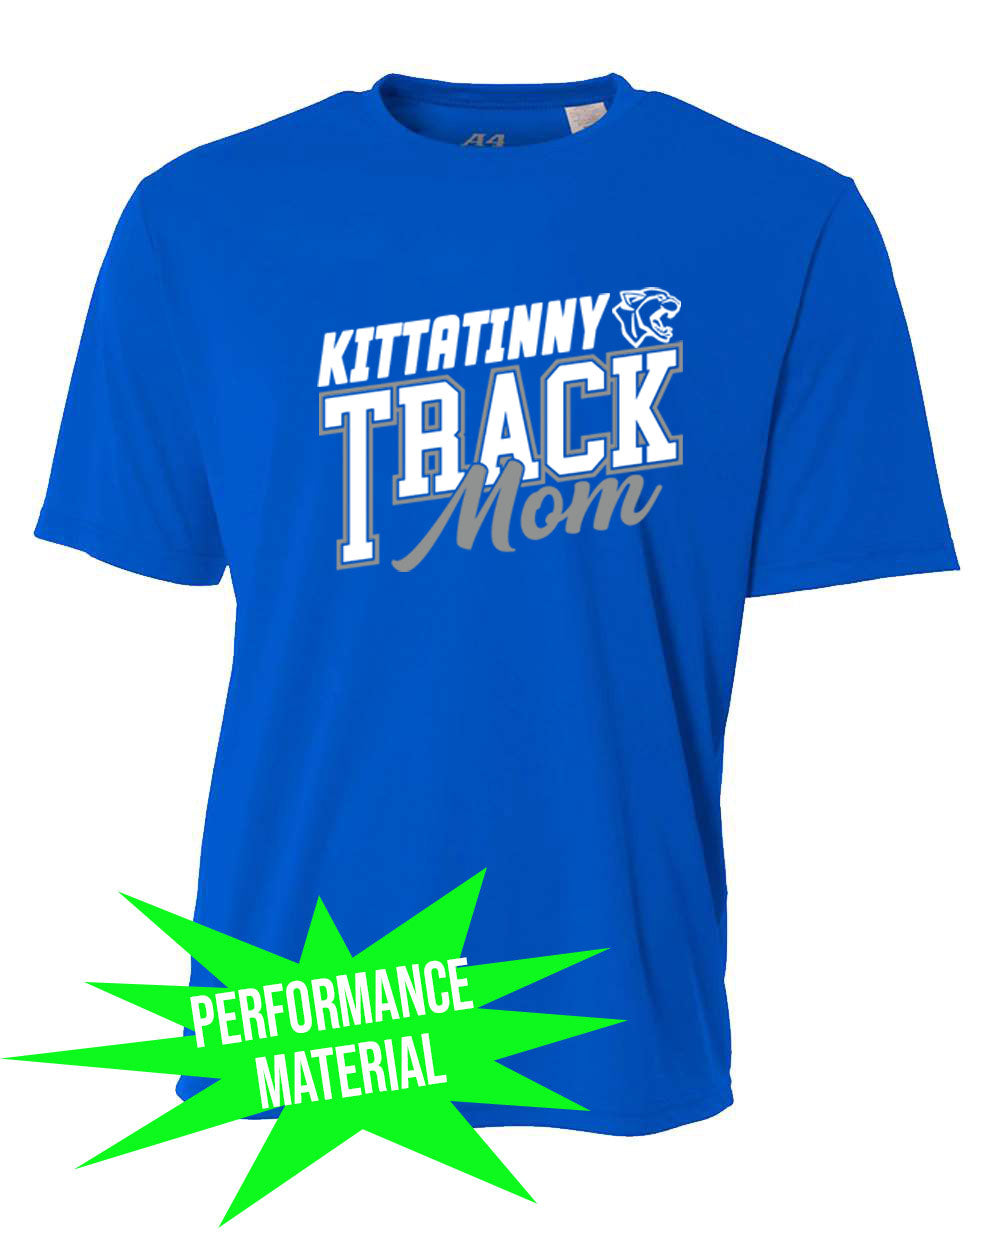 Kittatinny Track Performance Material design 4 T-Shirt